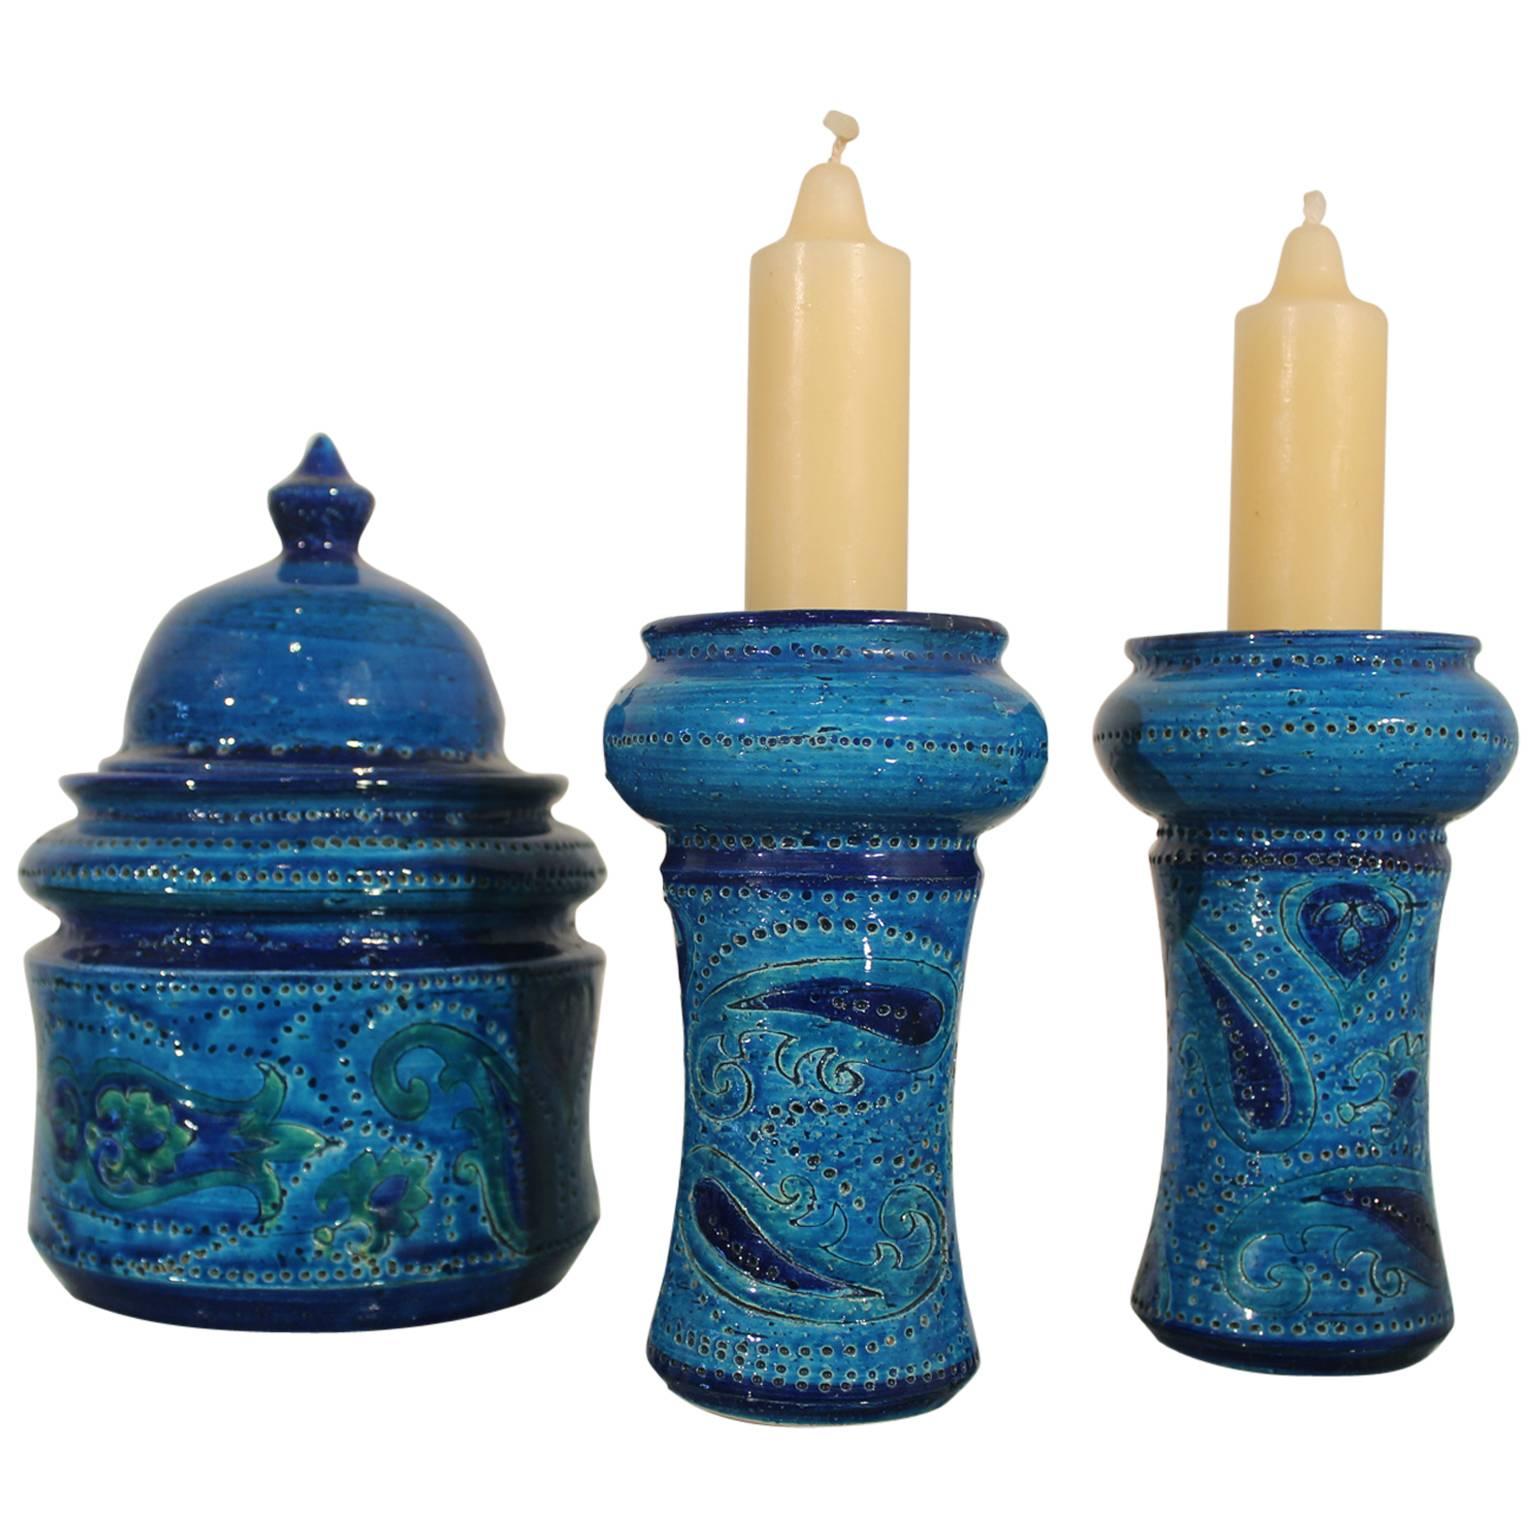 Rosenthal Netter Aldo Londi Bitossi Pottery Candlesticks and 